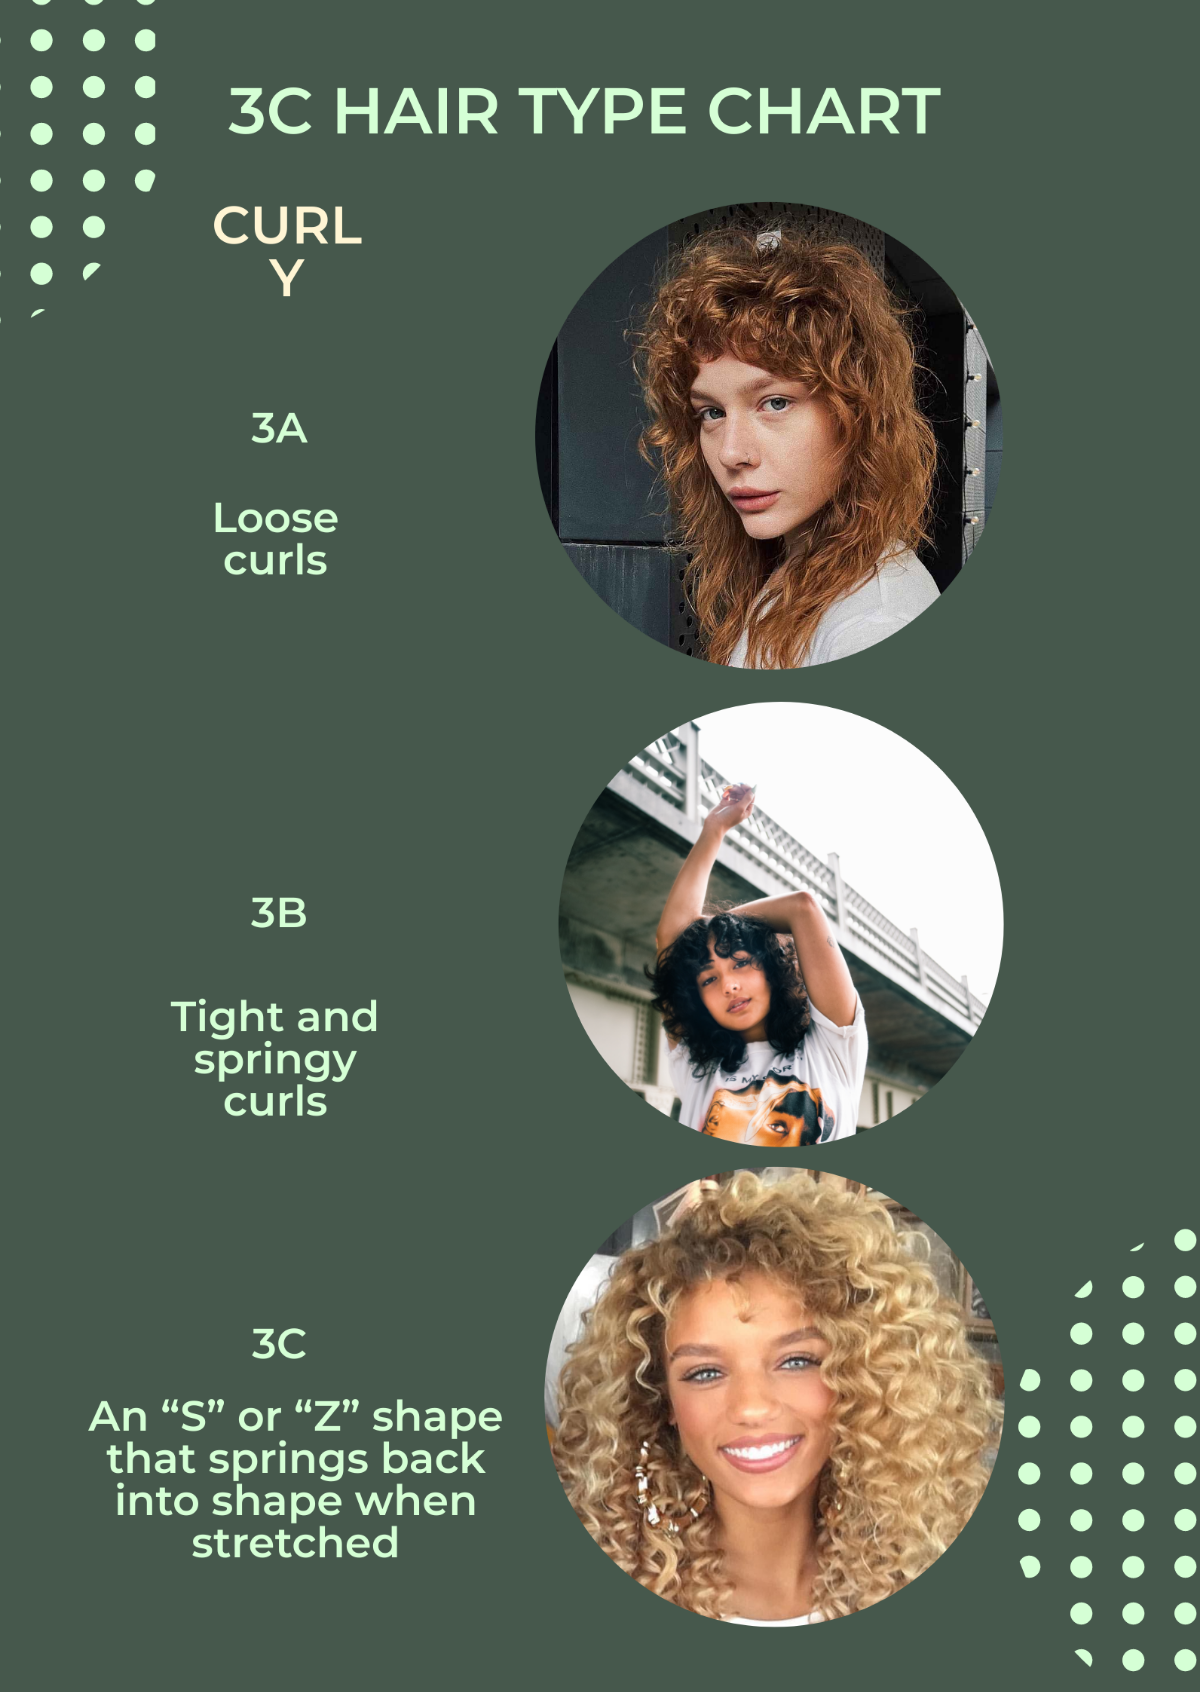 3C Hair Type Chart Template